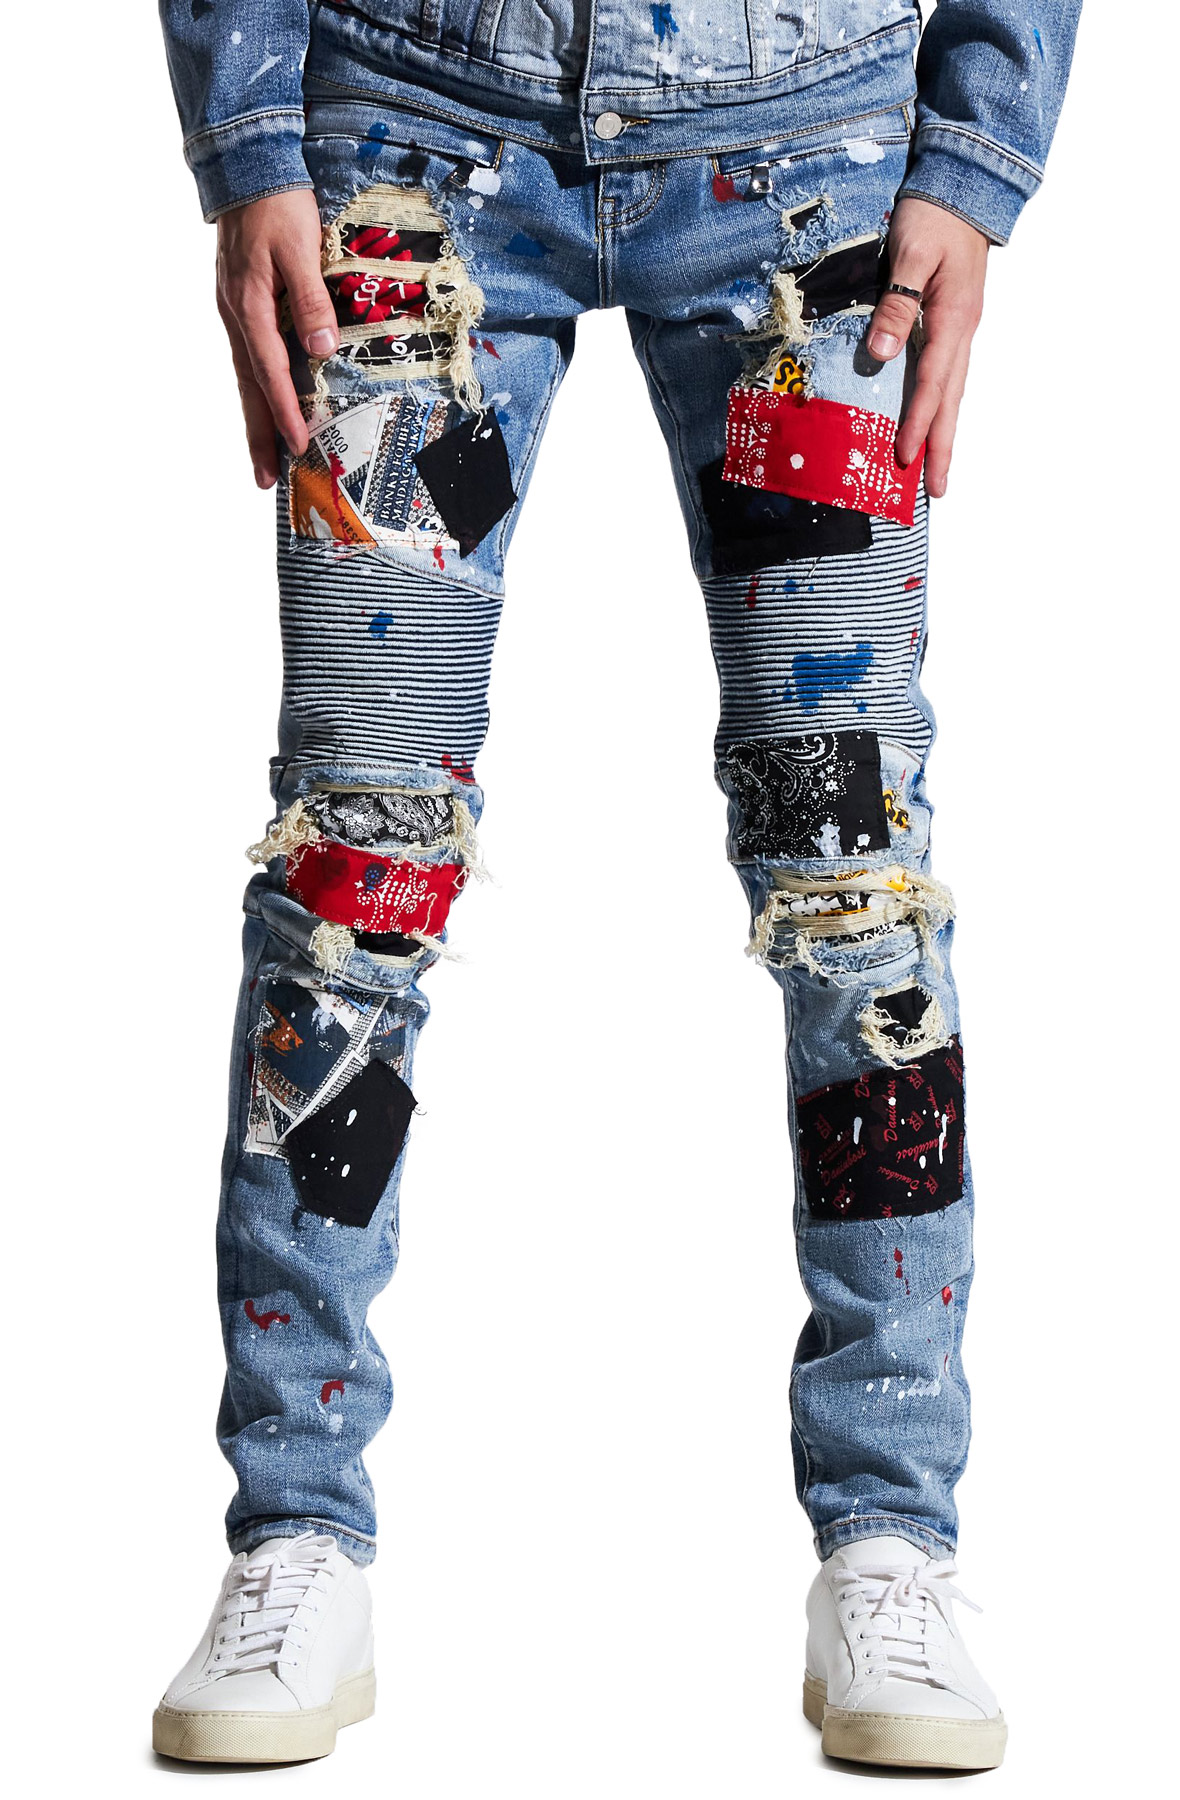 rebel moto panel jeans